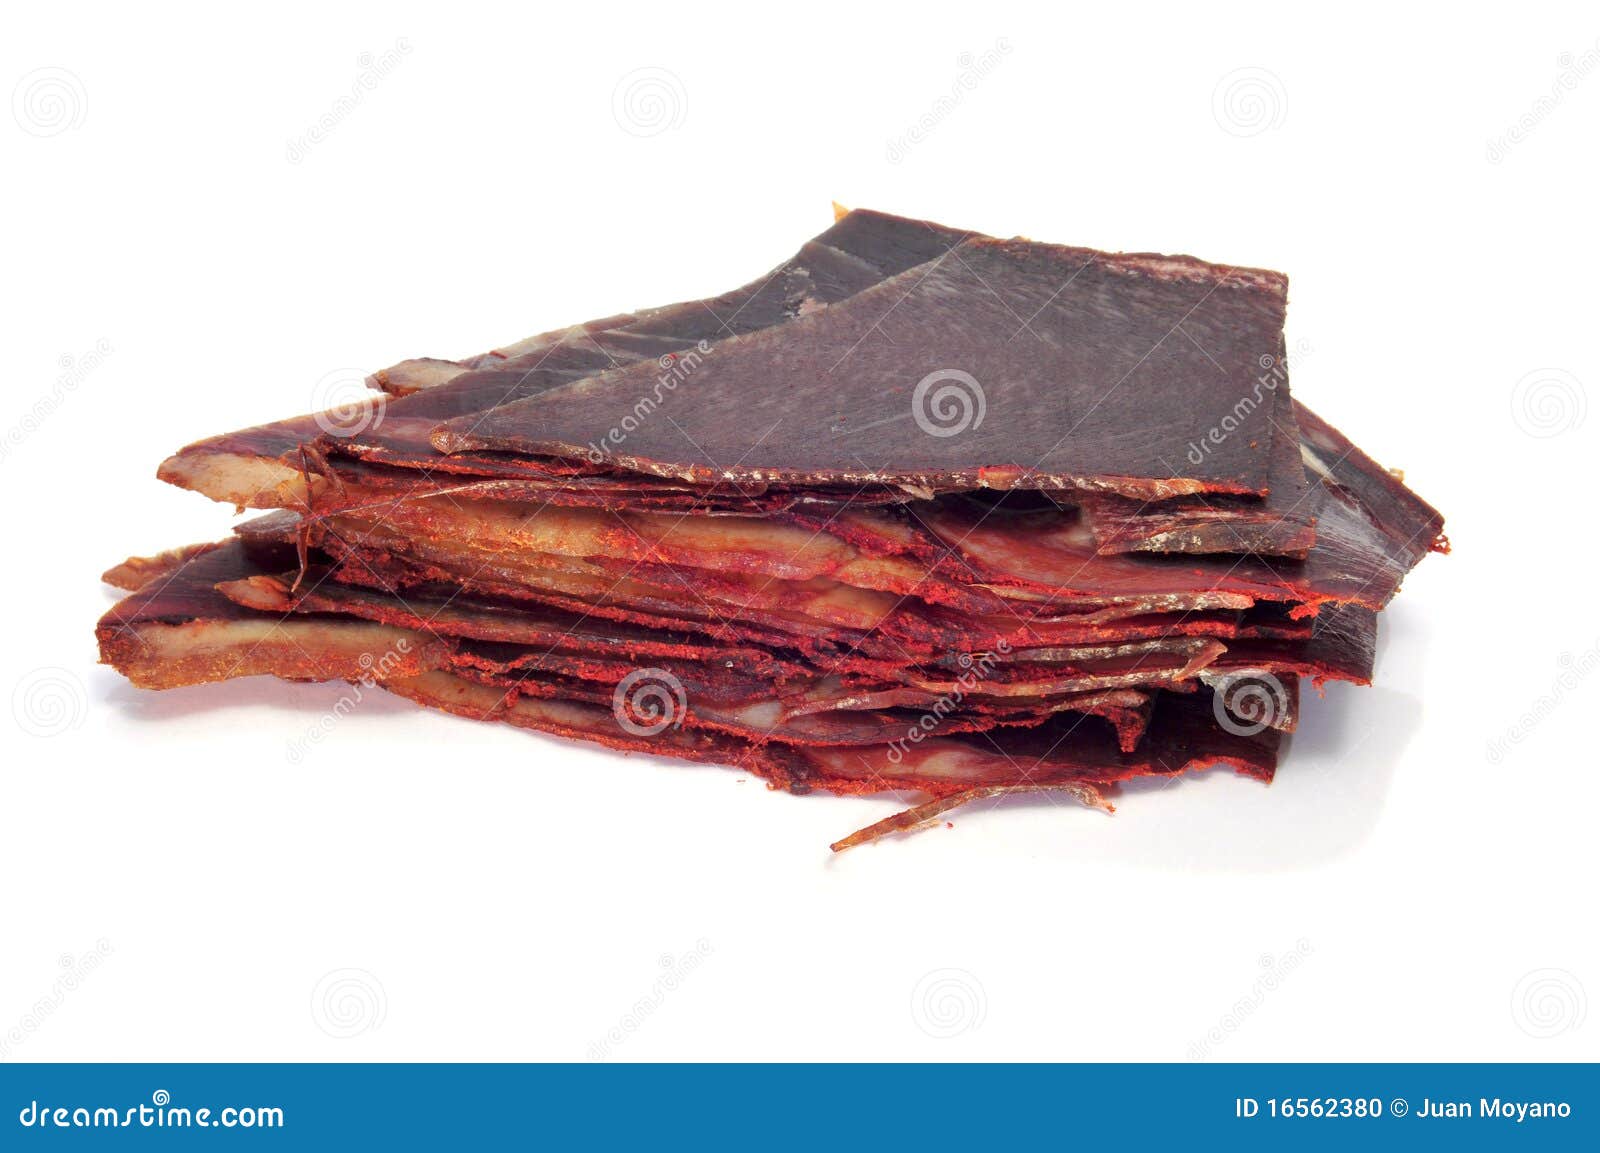 Cecina stock photo. Image of iberian, isolated, sausage - 16562380